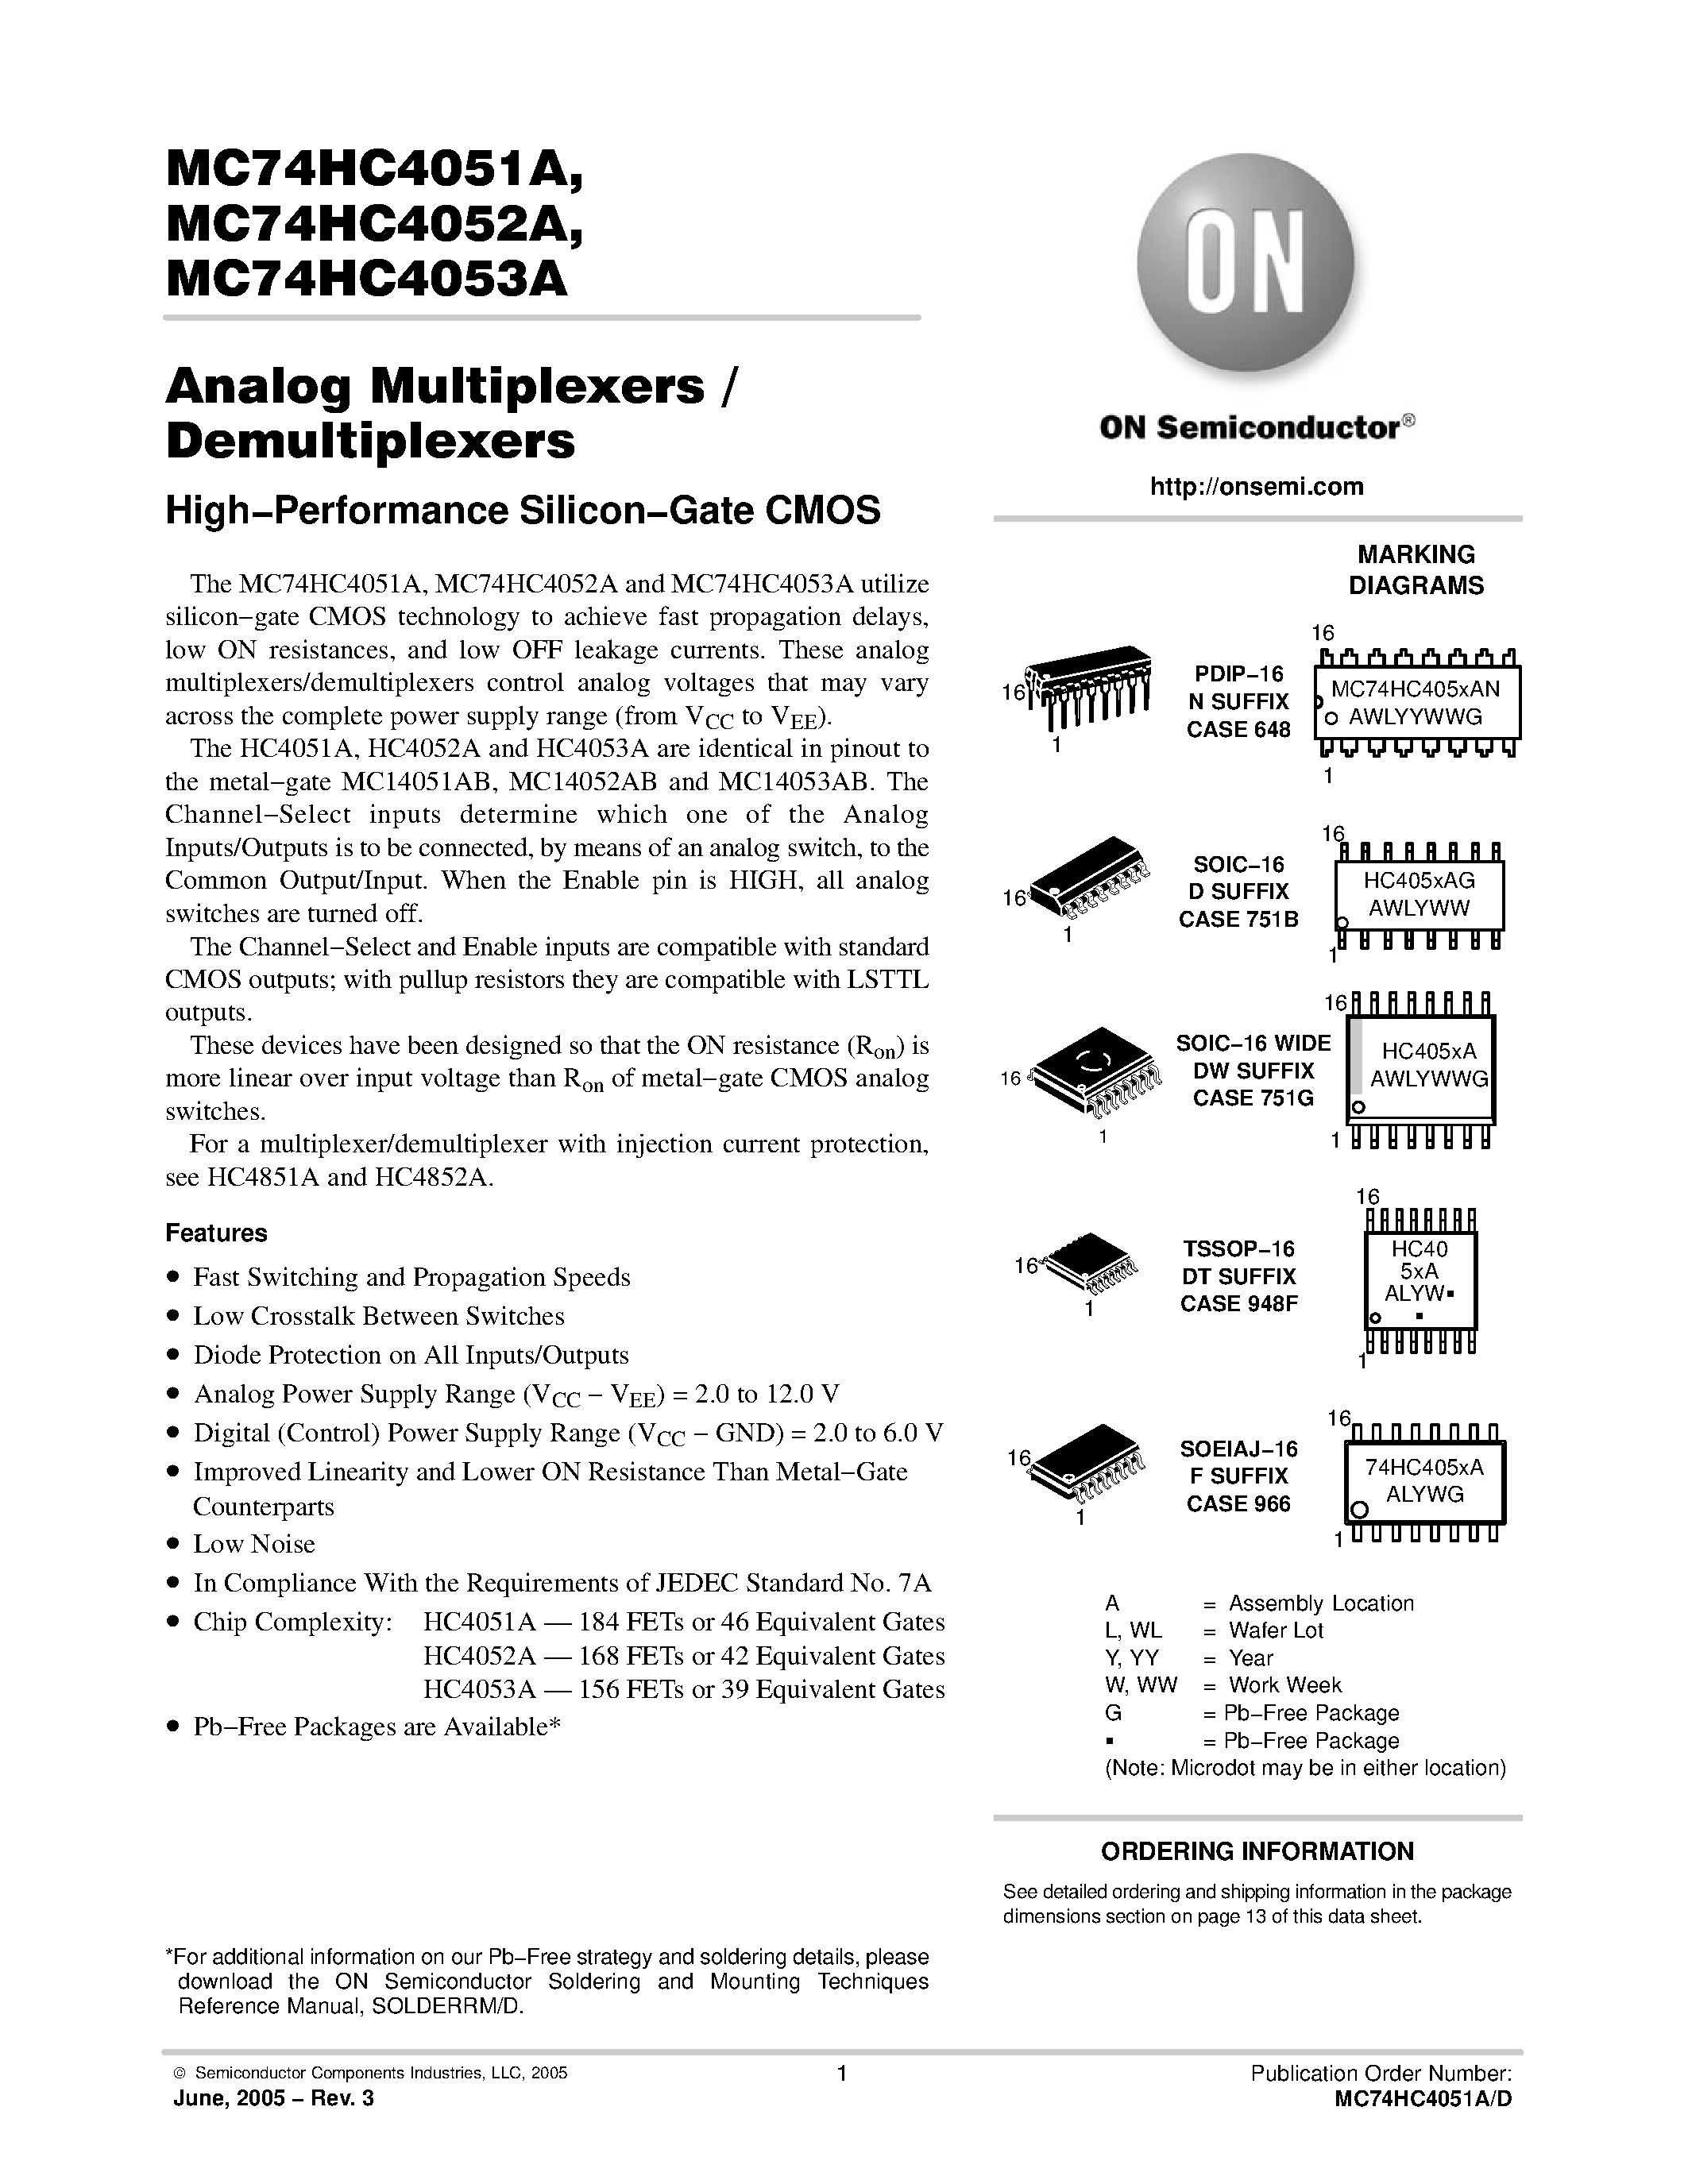 Даташит MC74HC4051A - (MC74HC4051A - MC74HC4053A) Analog Multiplexers/Demultiplexers страница 1